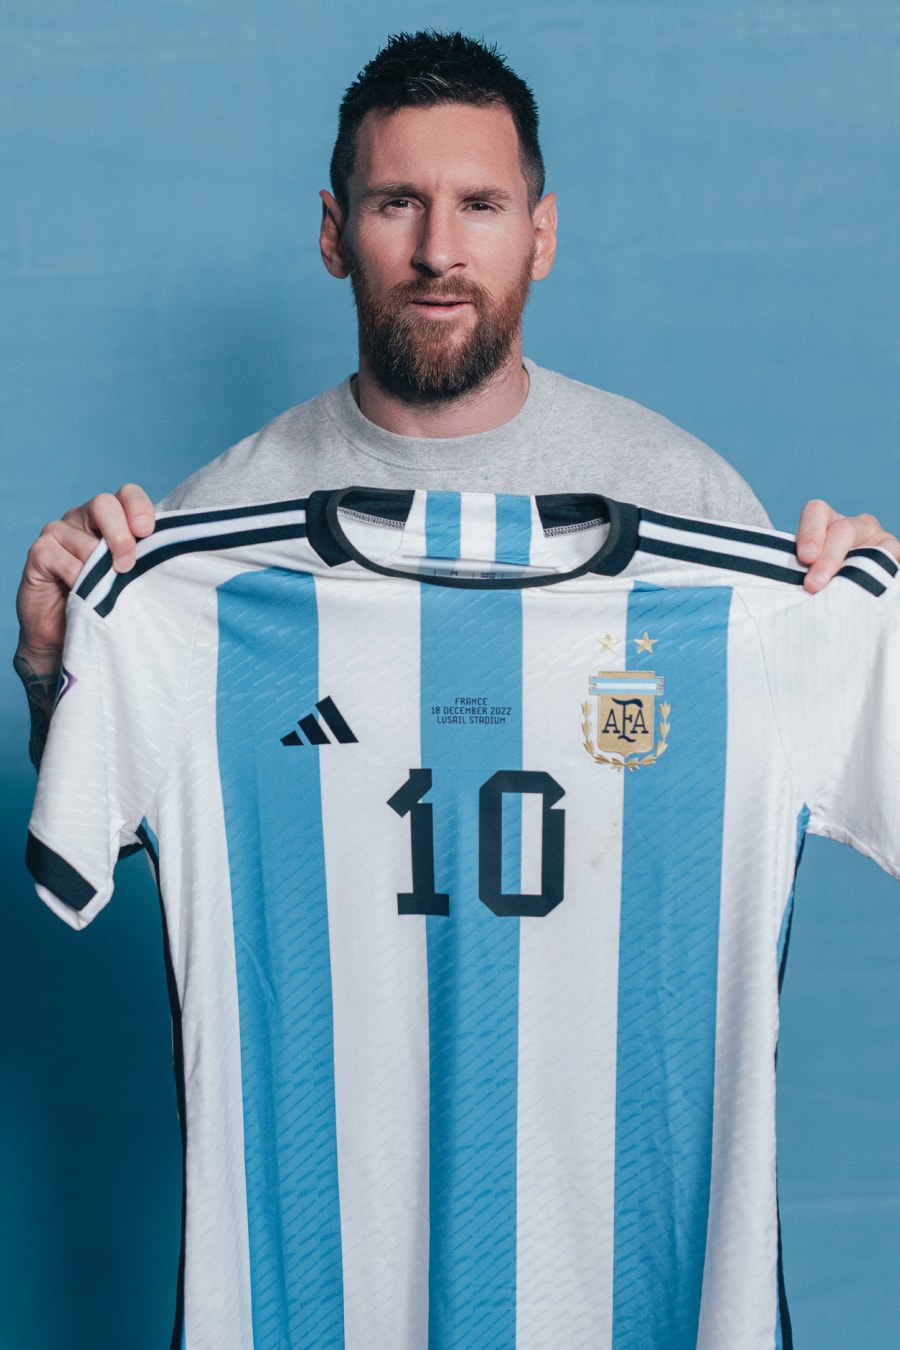 Lionel Messi 将拍卖 2022 年卡塔尔世界杯六件落場版球衣